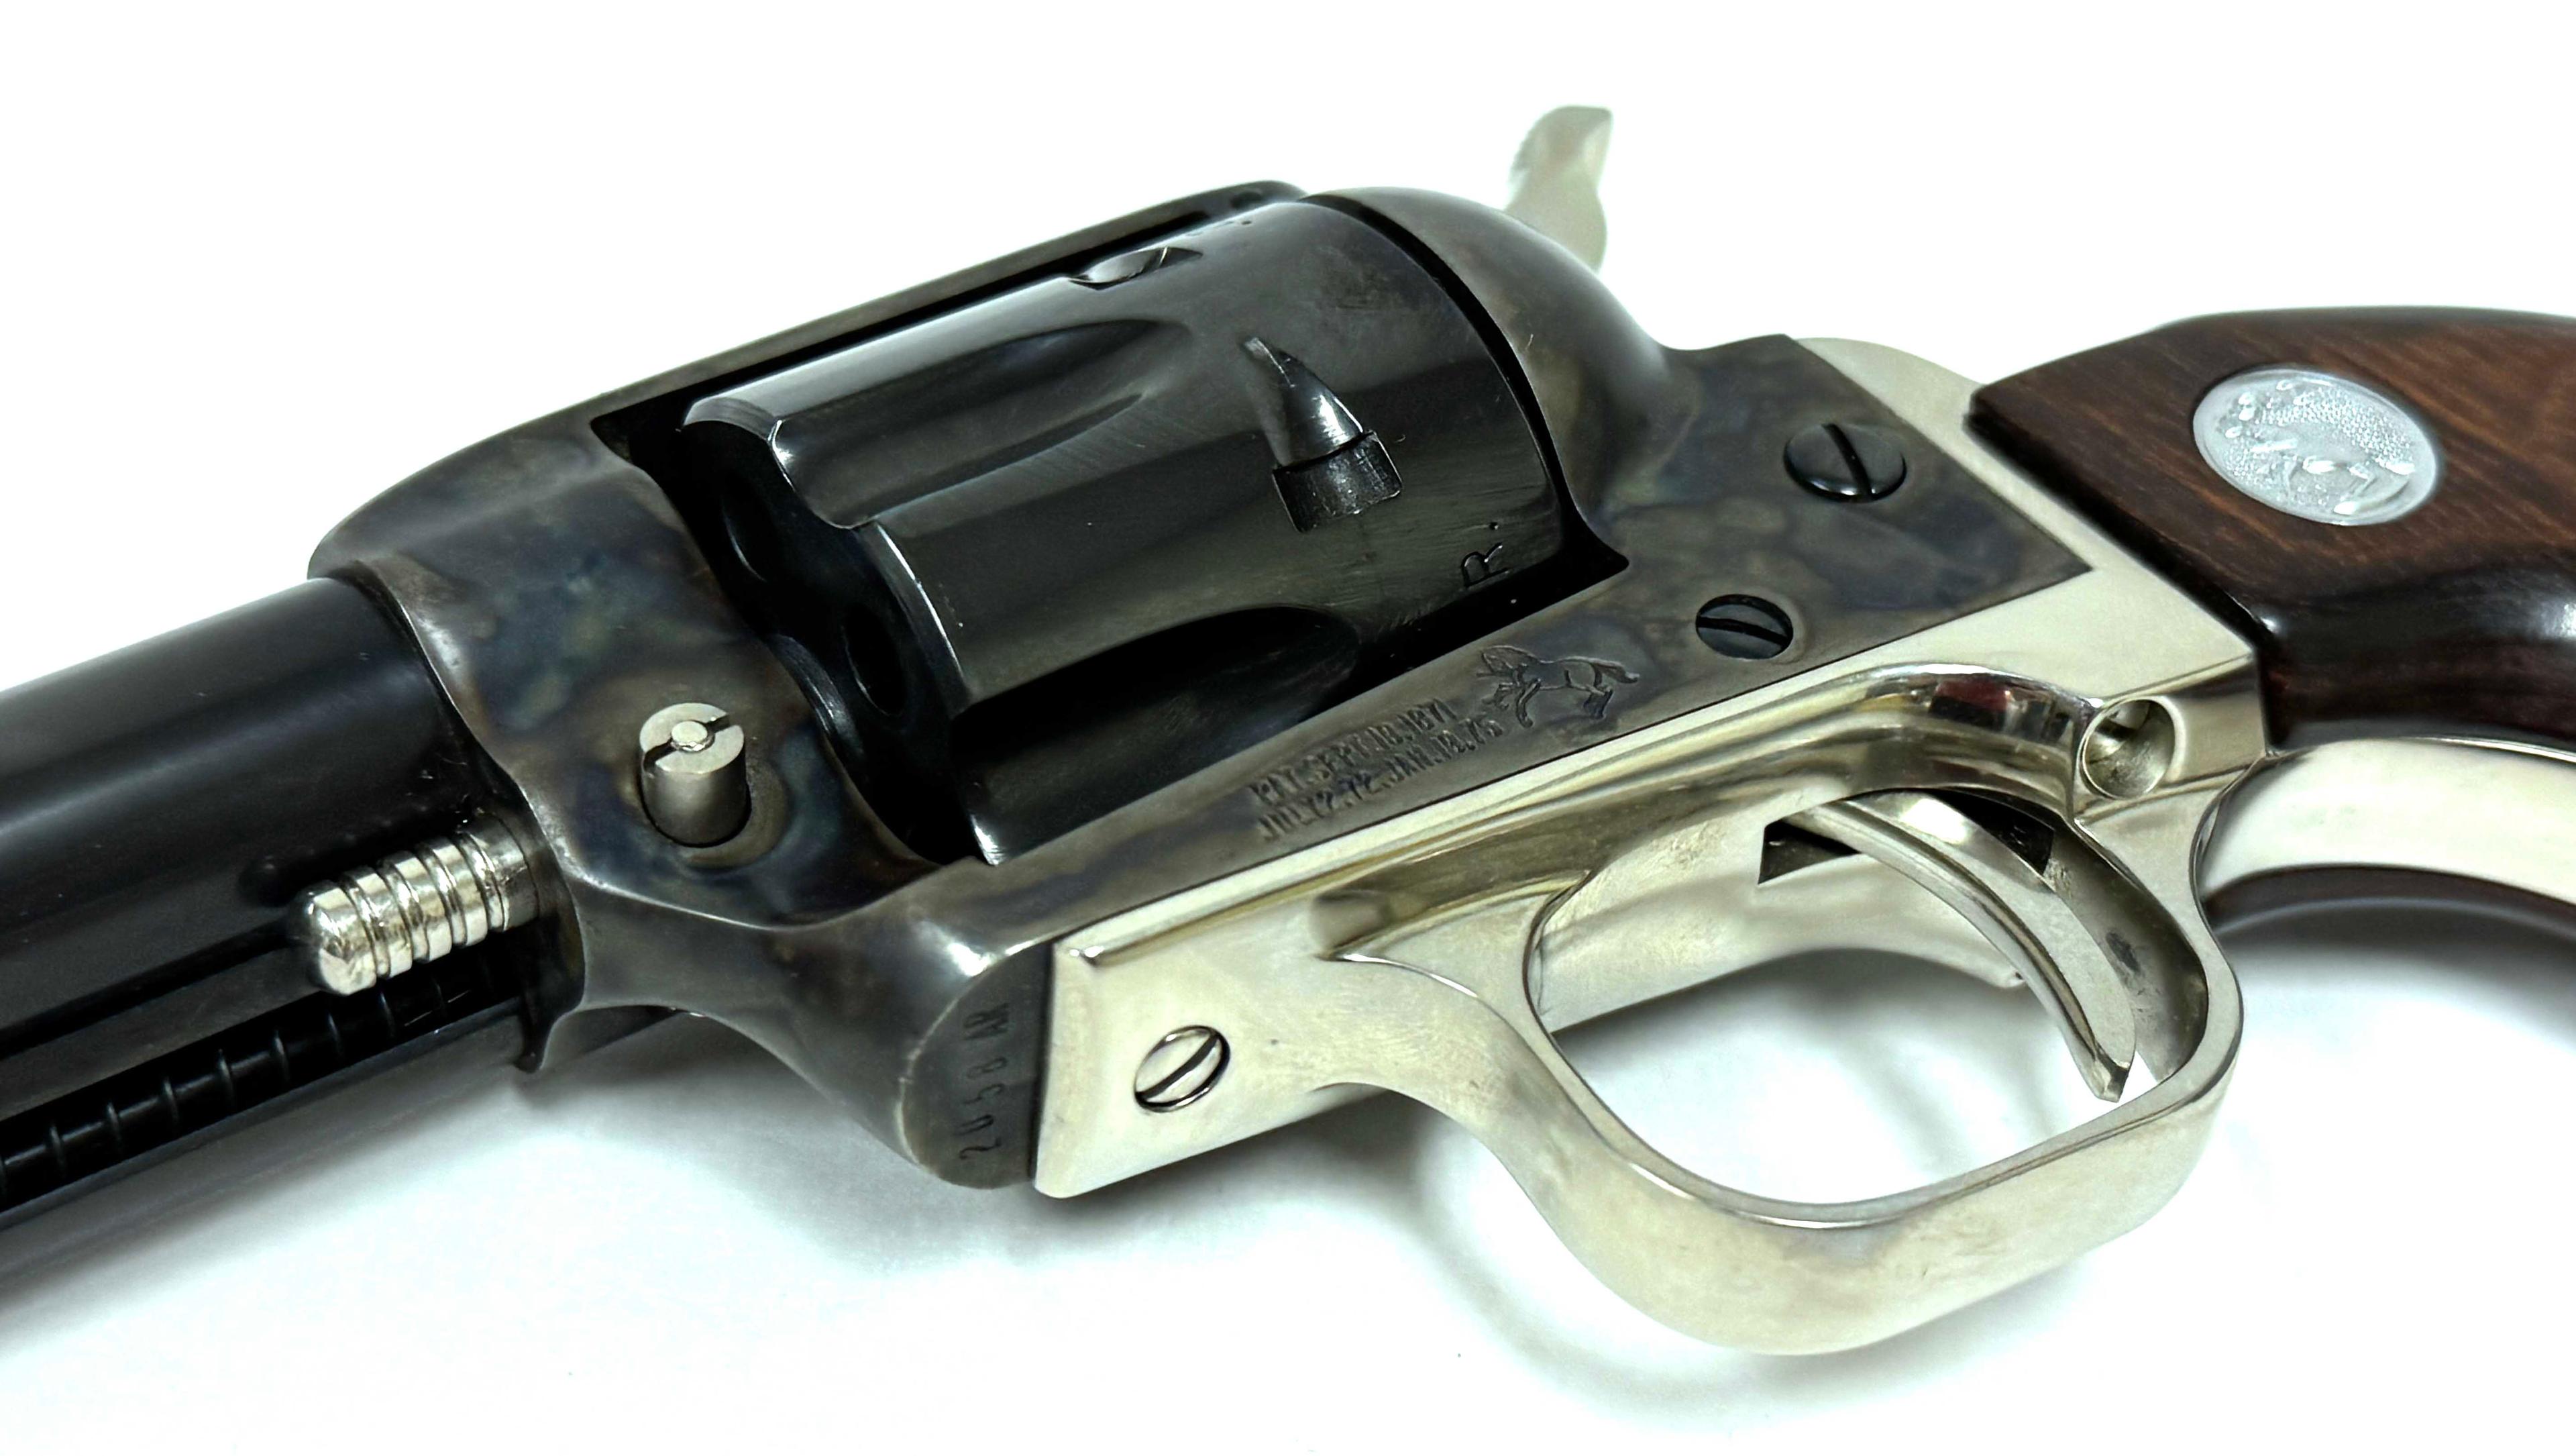 Excellent Colt Arizona Ranger Commemorative SAA .22 LR Single Action Revolver